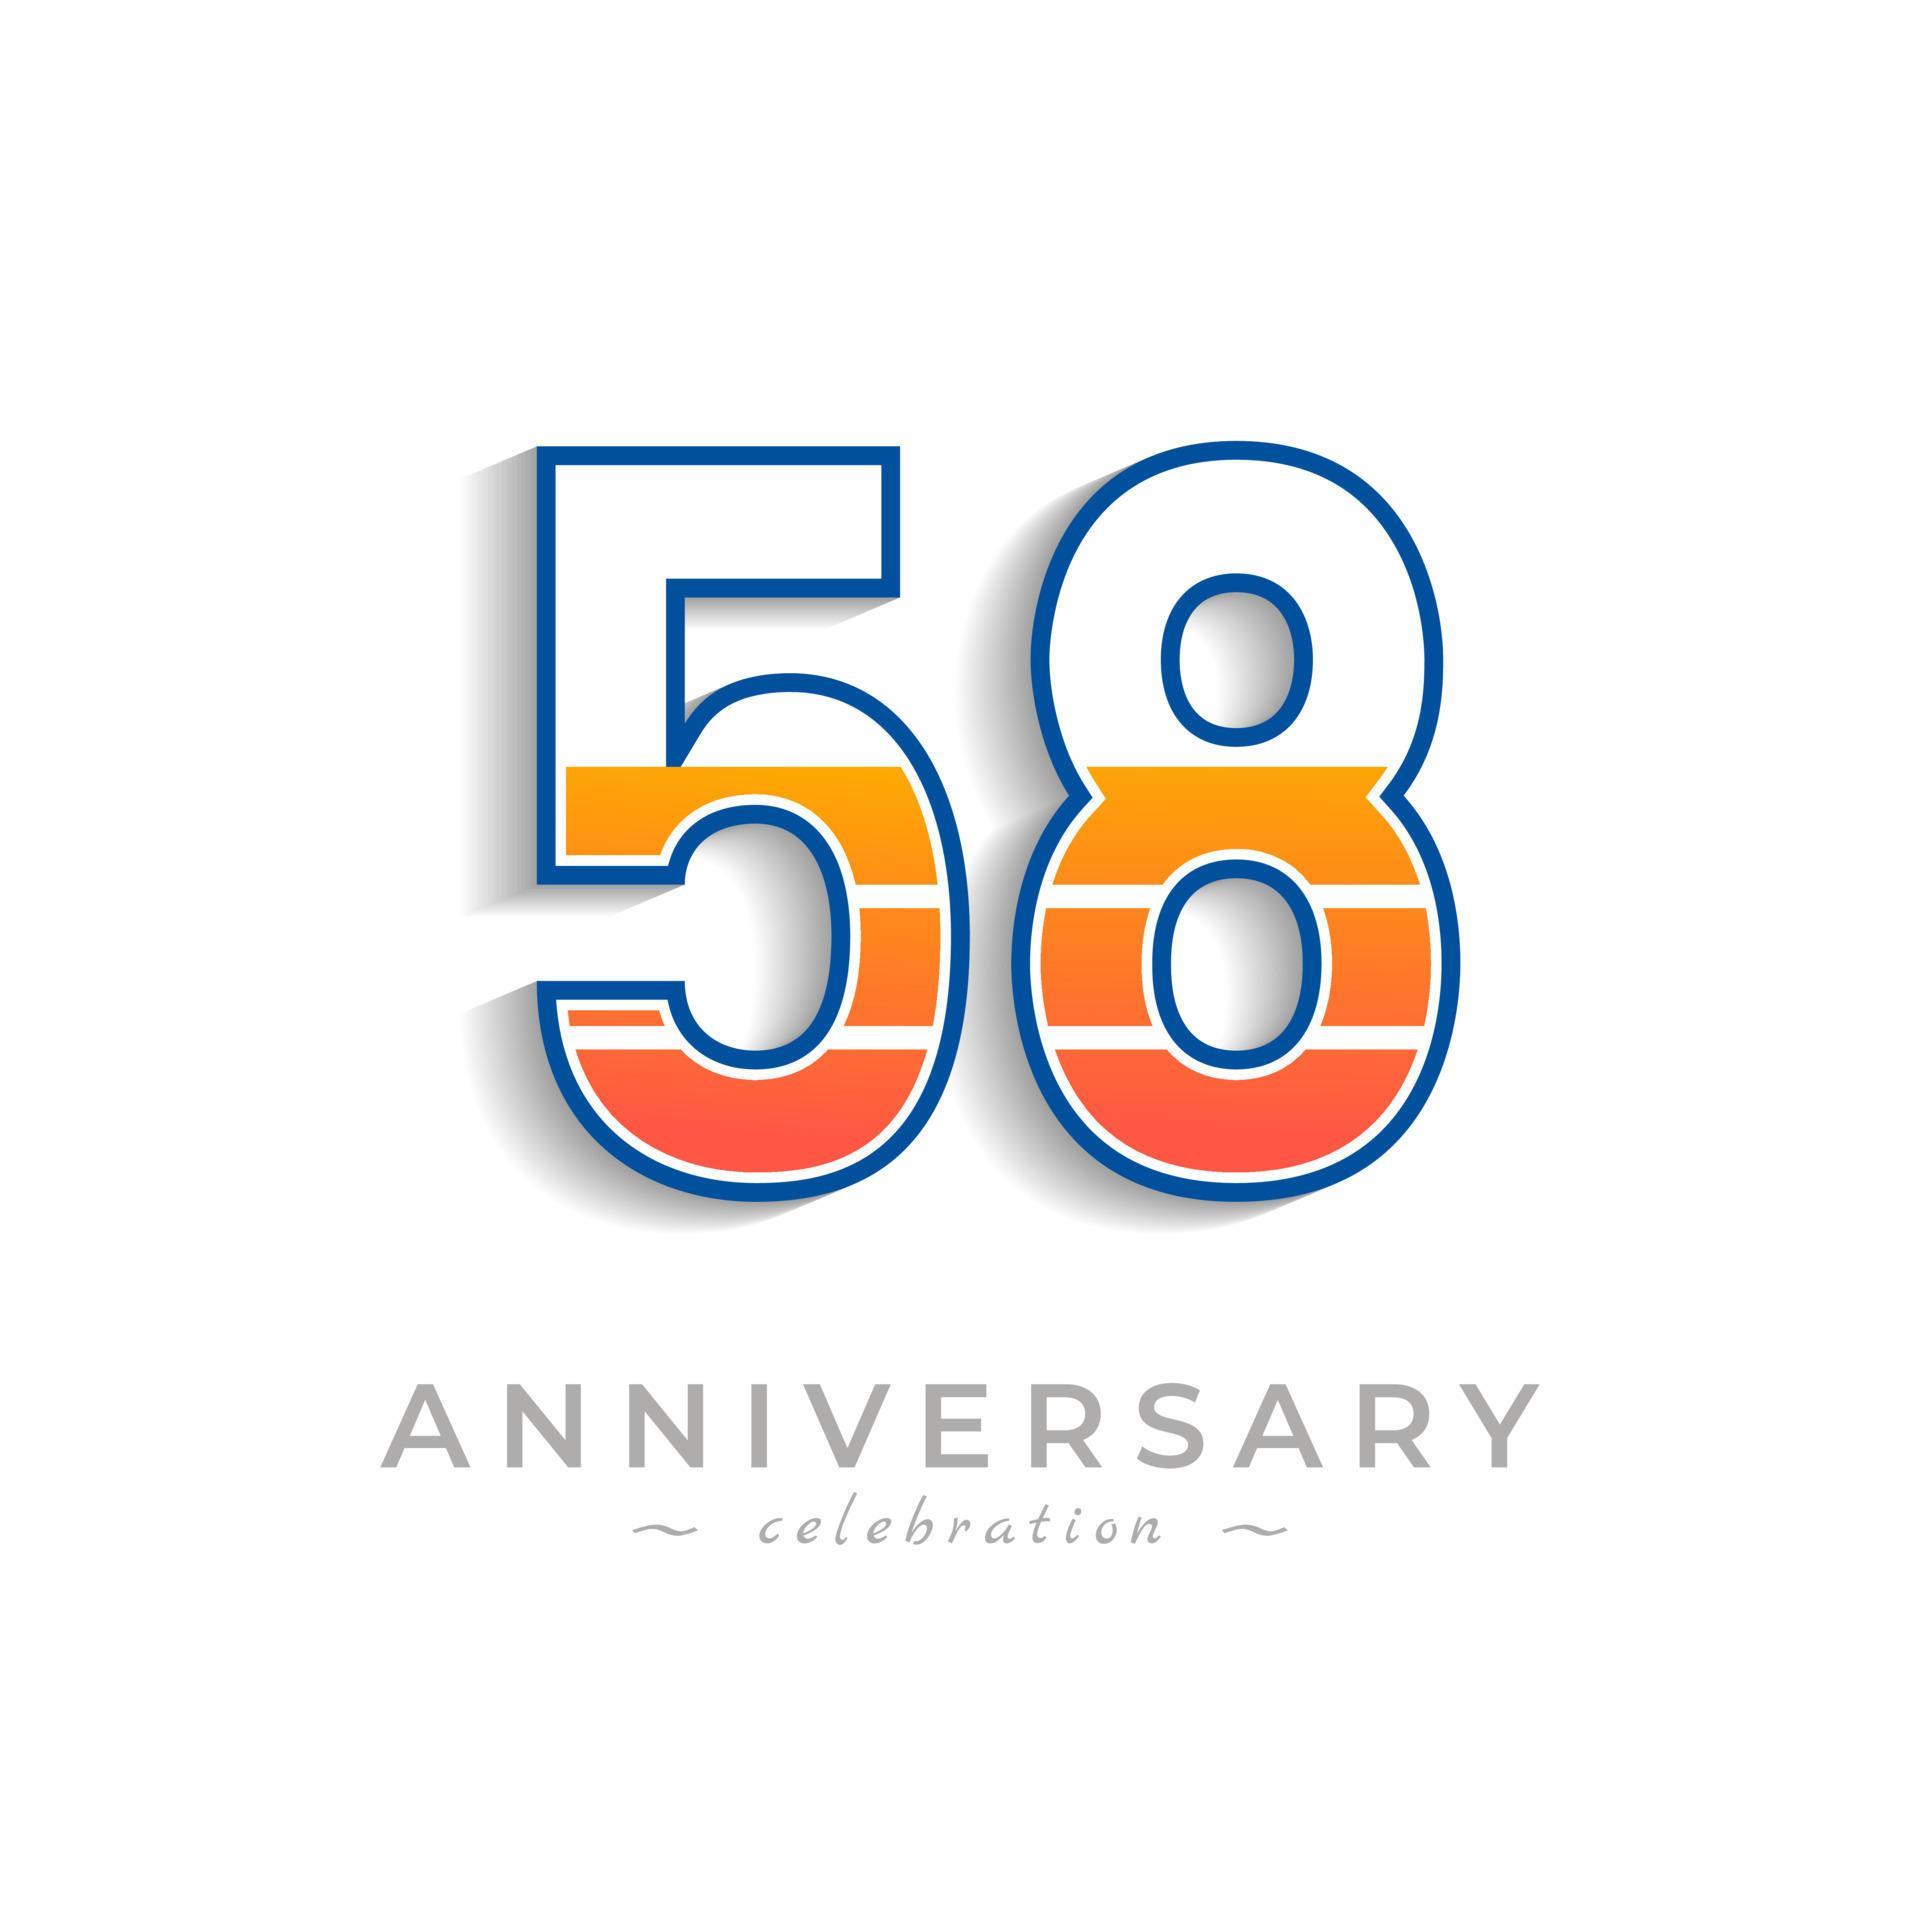 Celebración del aniversario de 58 años con batería de icono de carga para evento de celebración, boda, tarjeta de felicitación e invitación aislada en fondo blanco vector